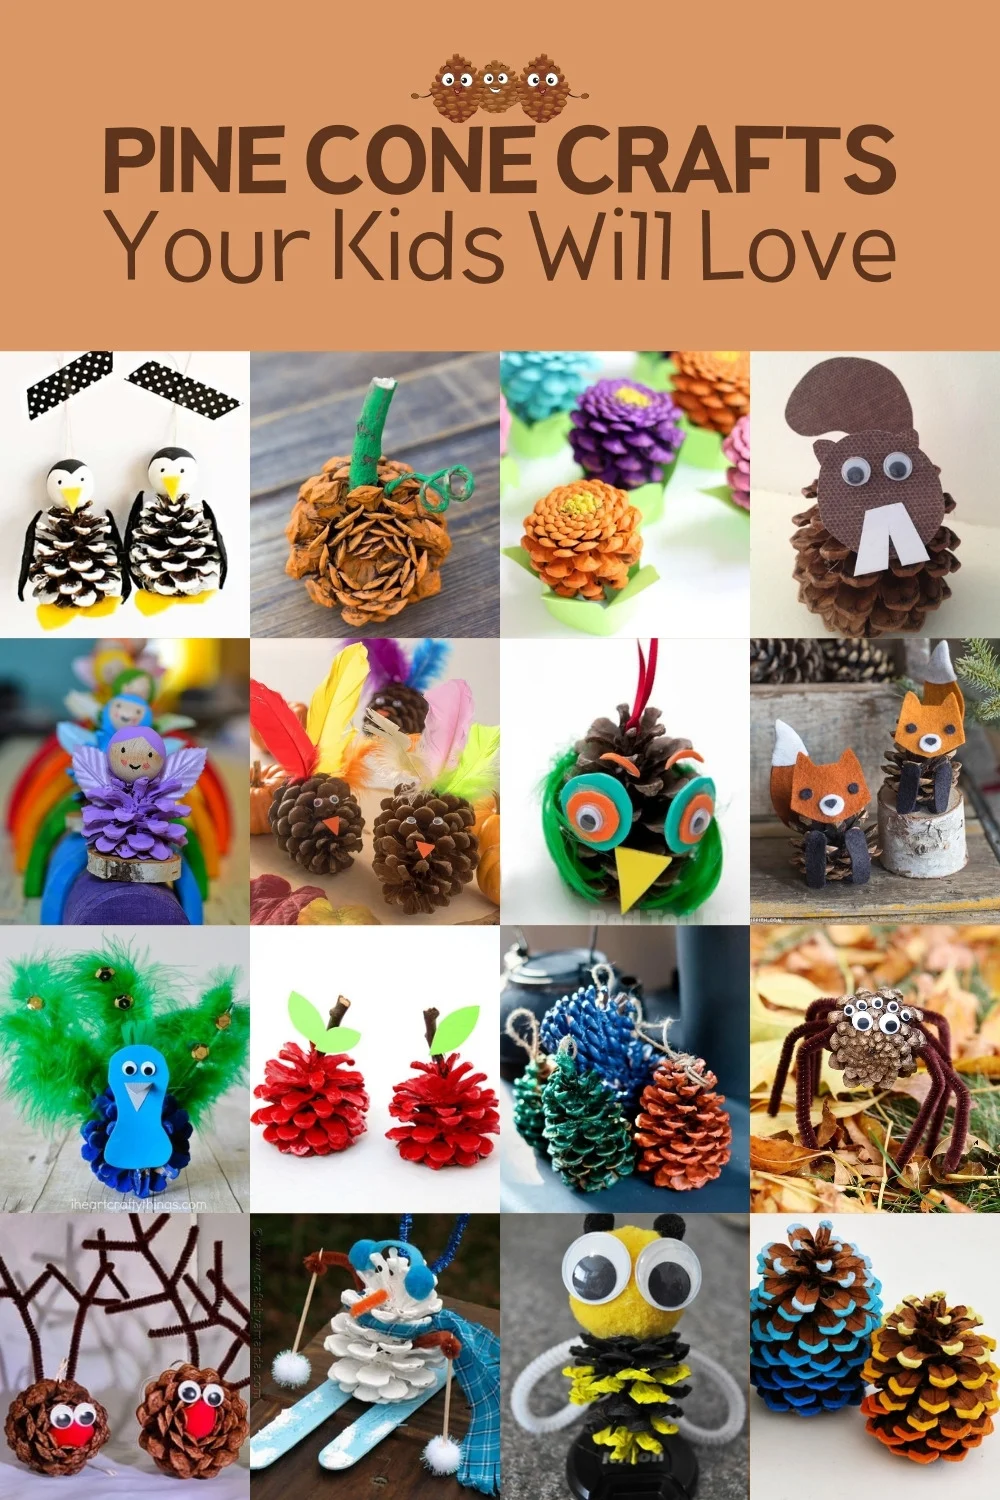 https://diycandy.b-cdn.net/wp-content/uploads/2021/08/25-Pine-Cone-Crafts-Your-Kids-Will-Love.jpg.webp